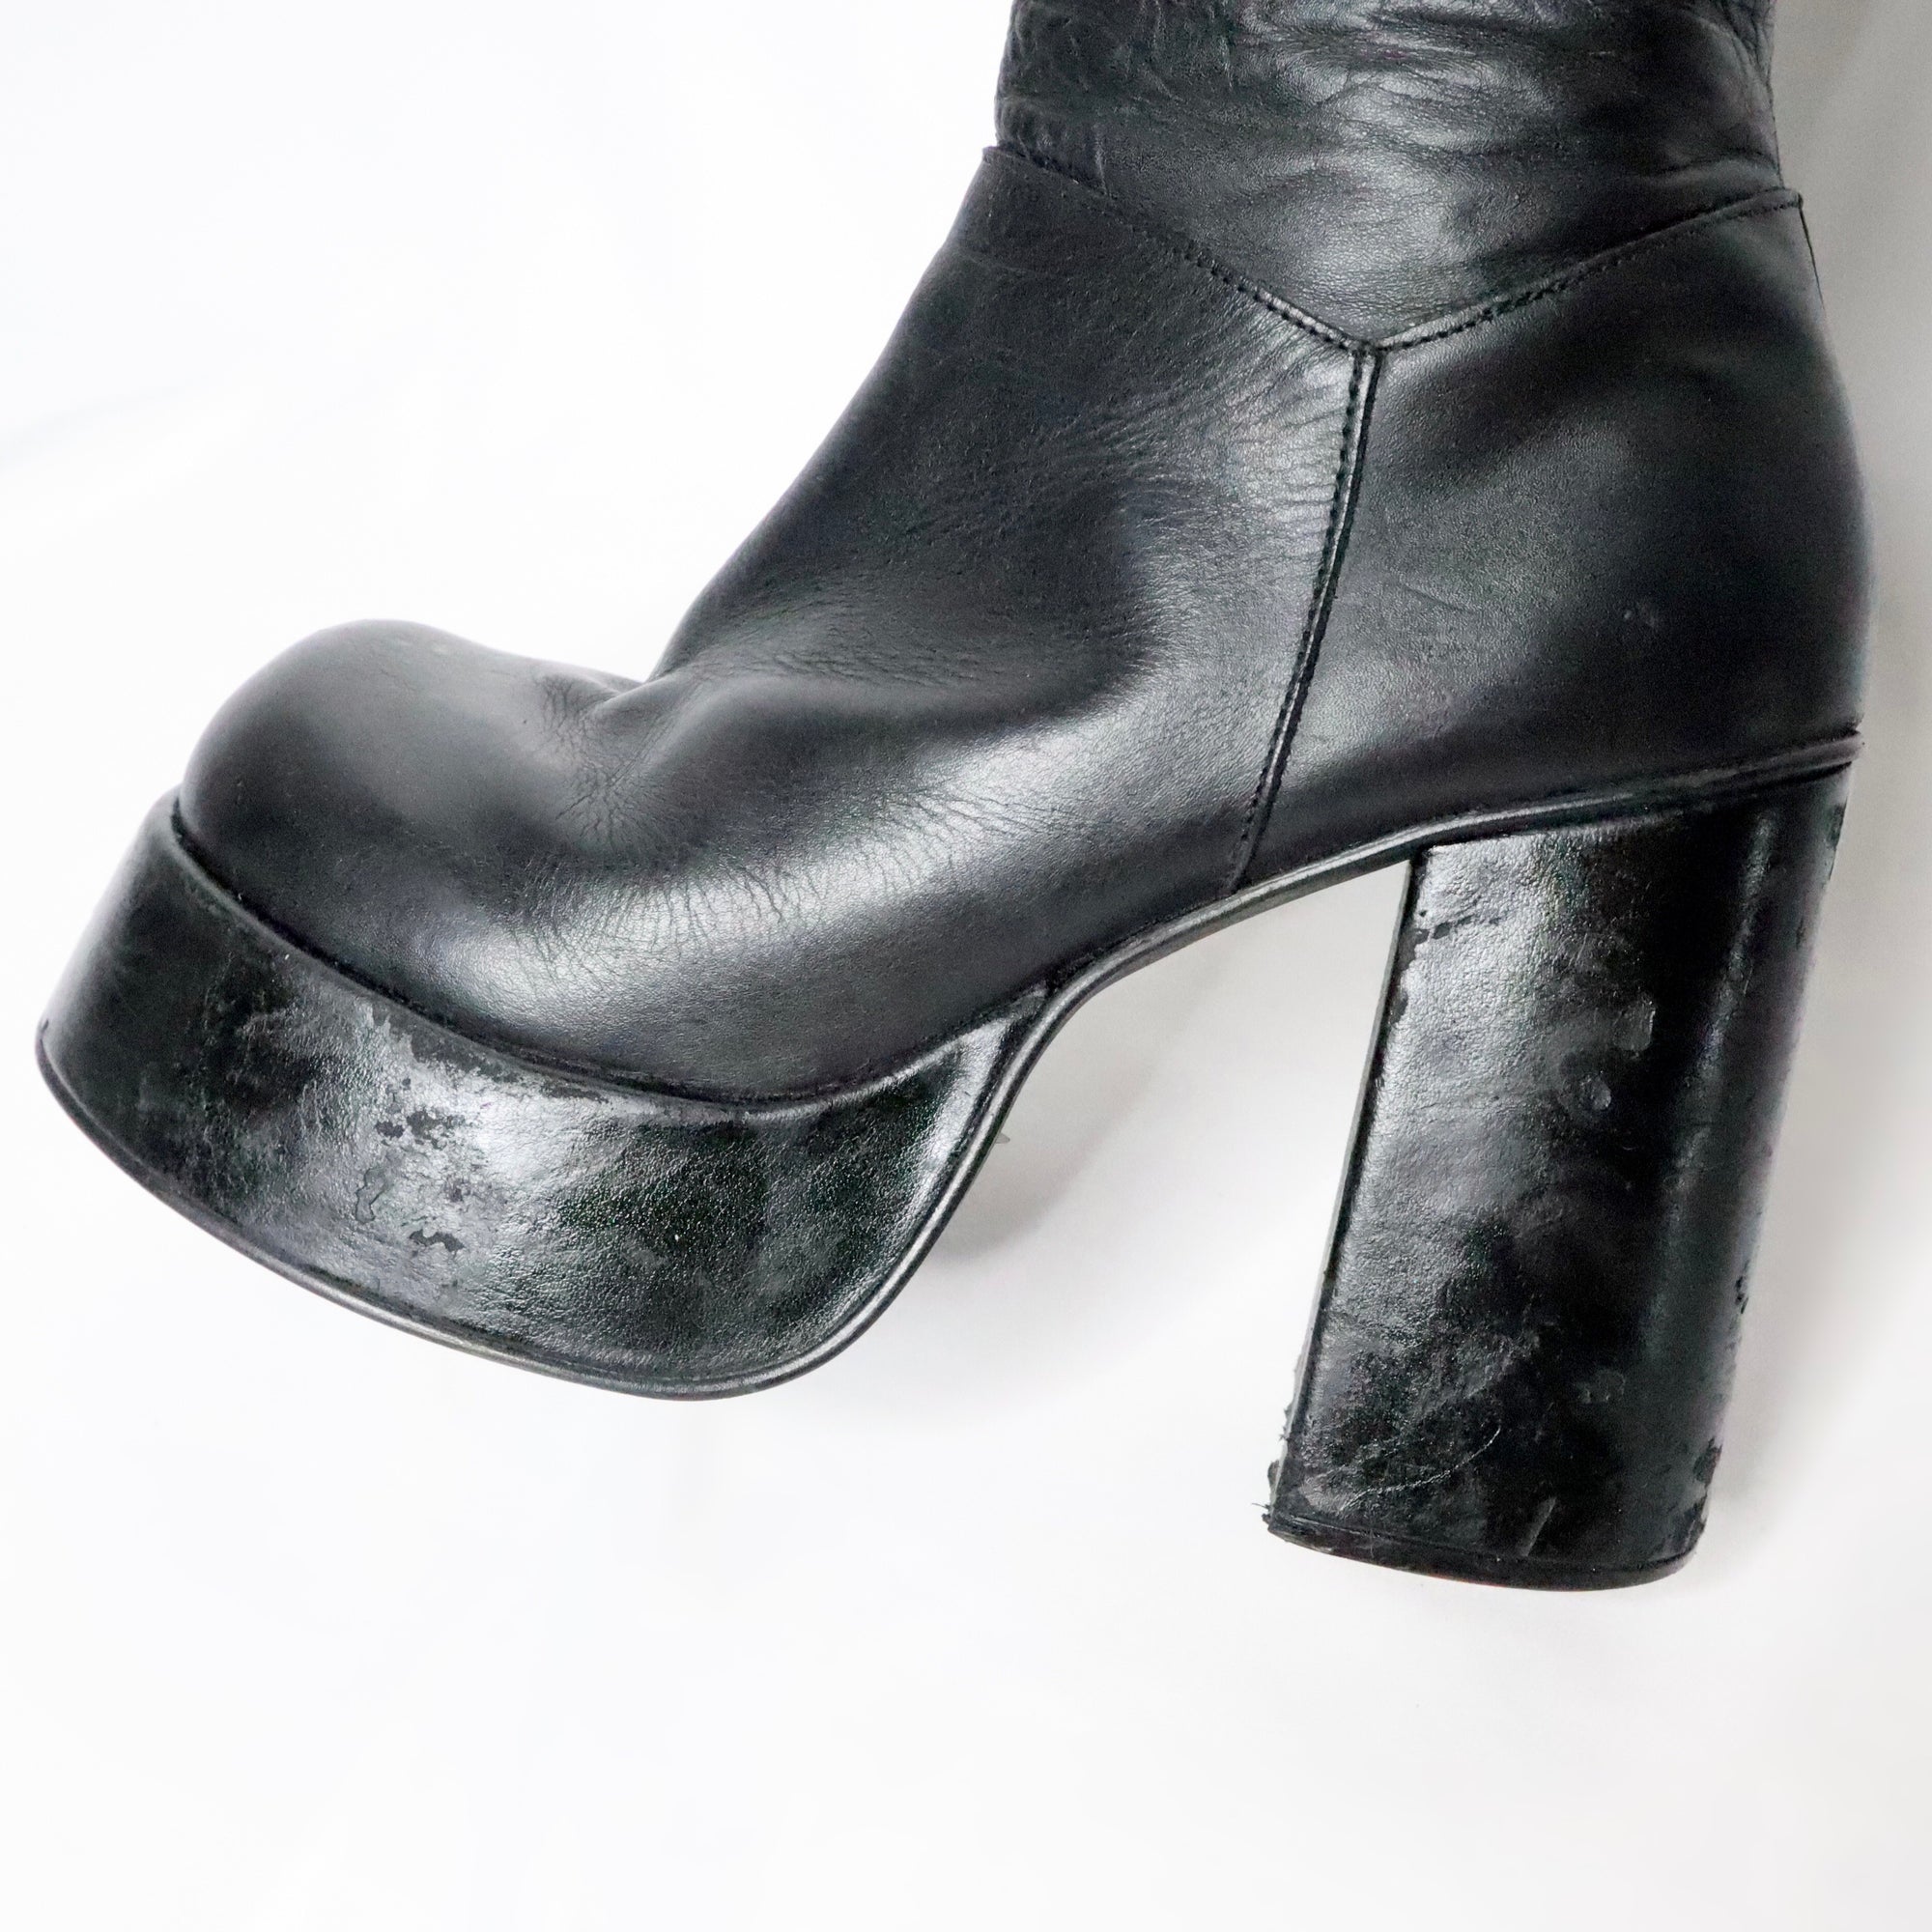 Black Leather Platform Boots (8.5 US/39 EU)